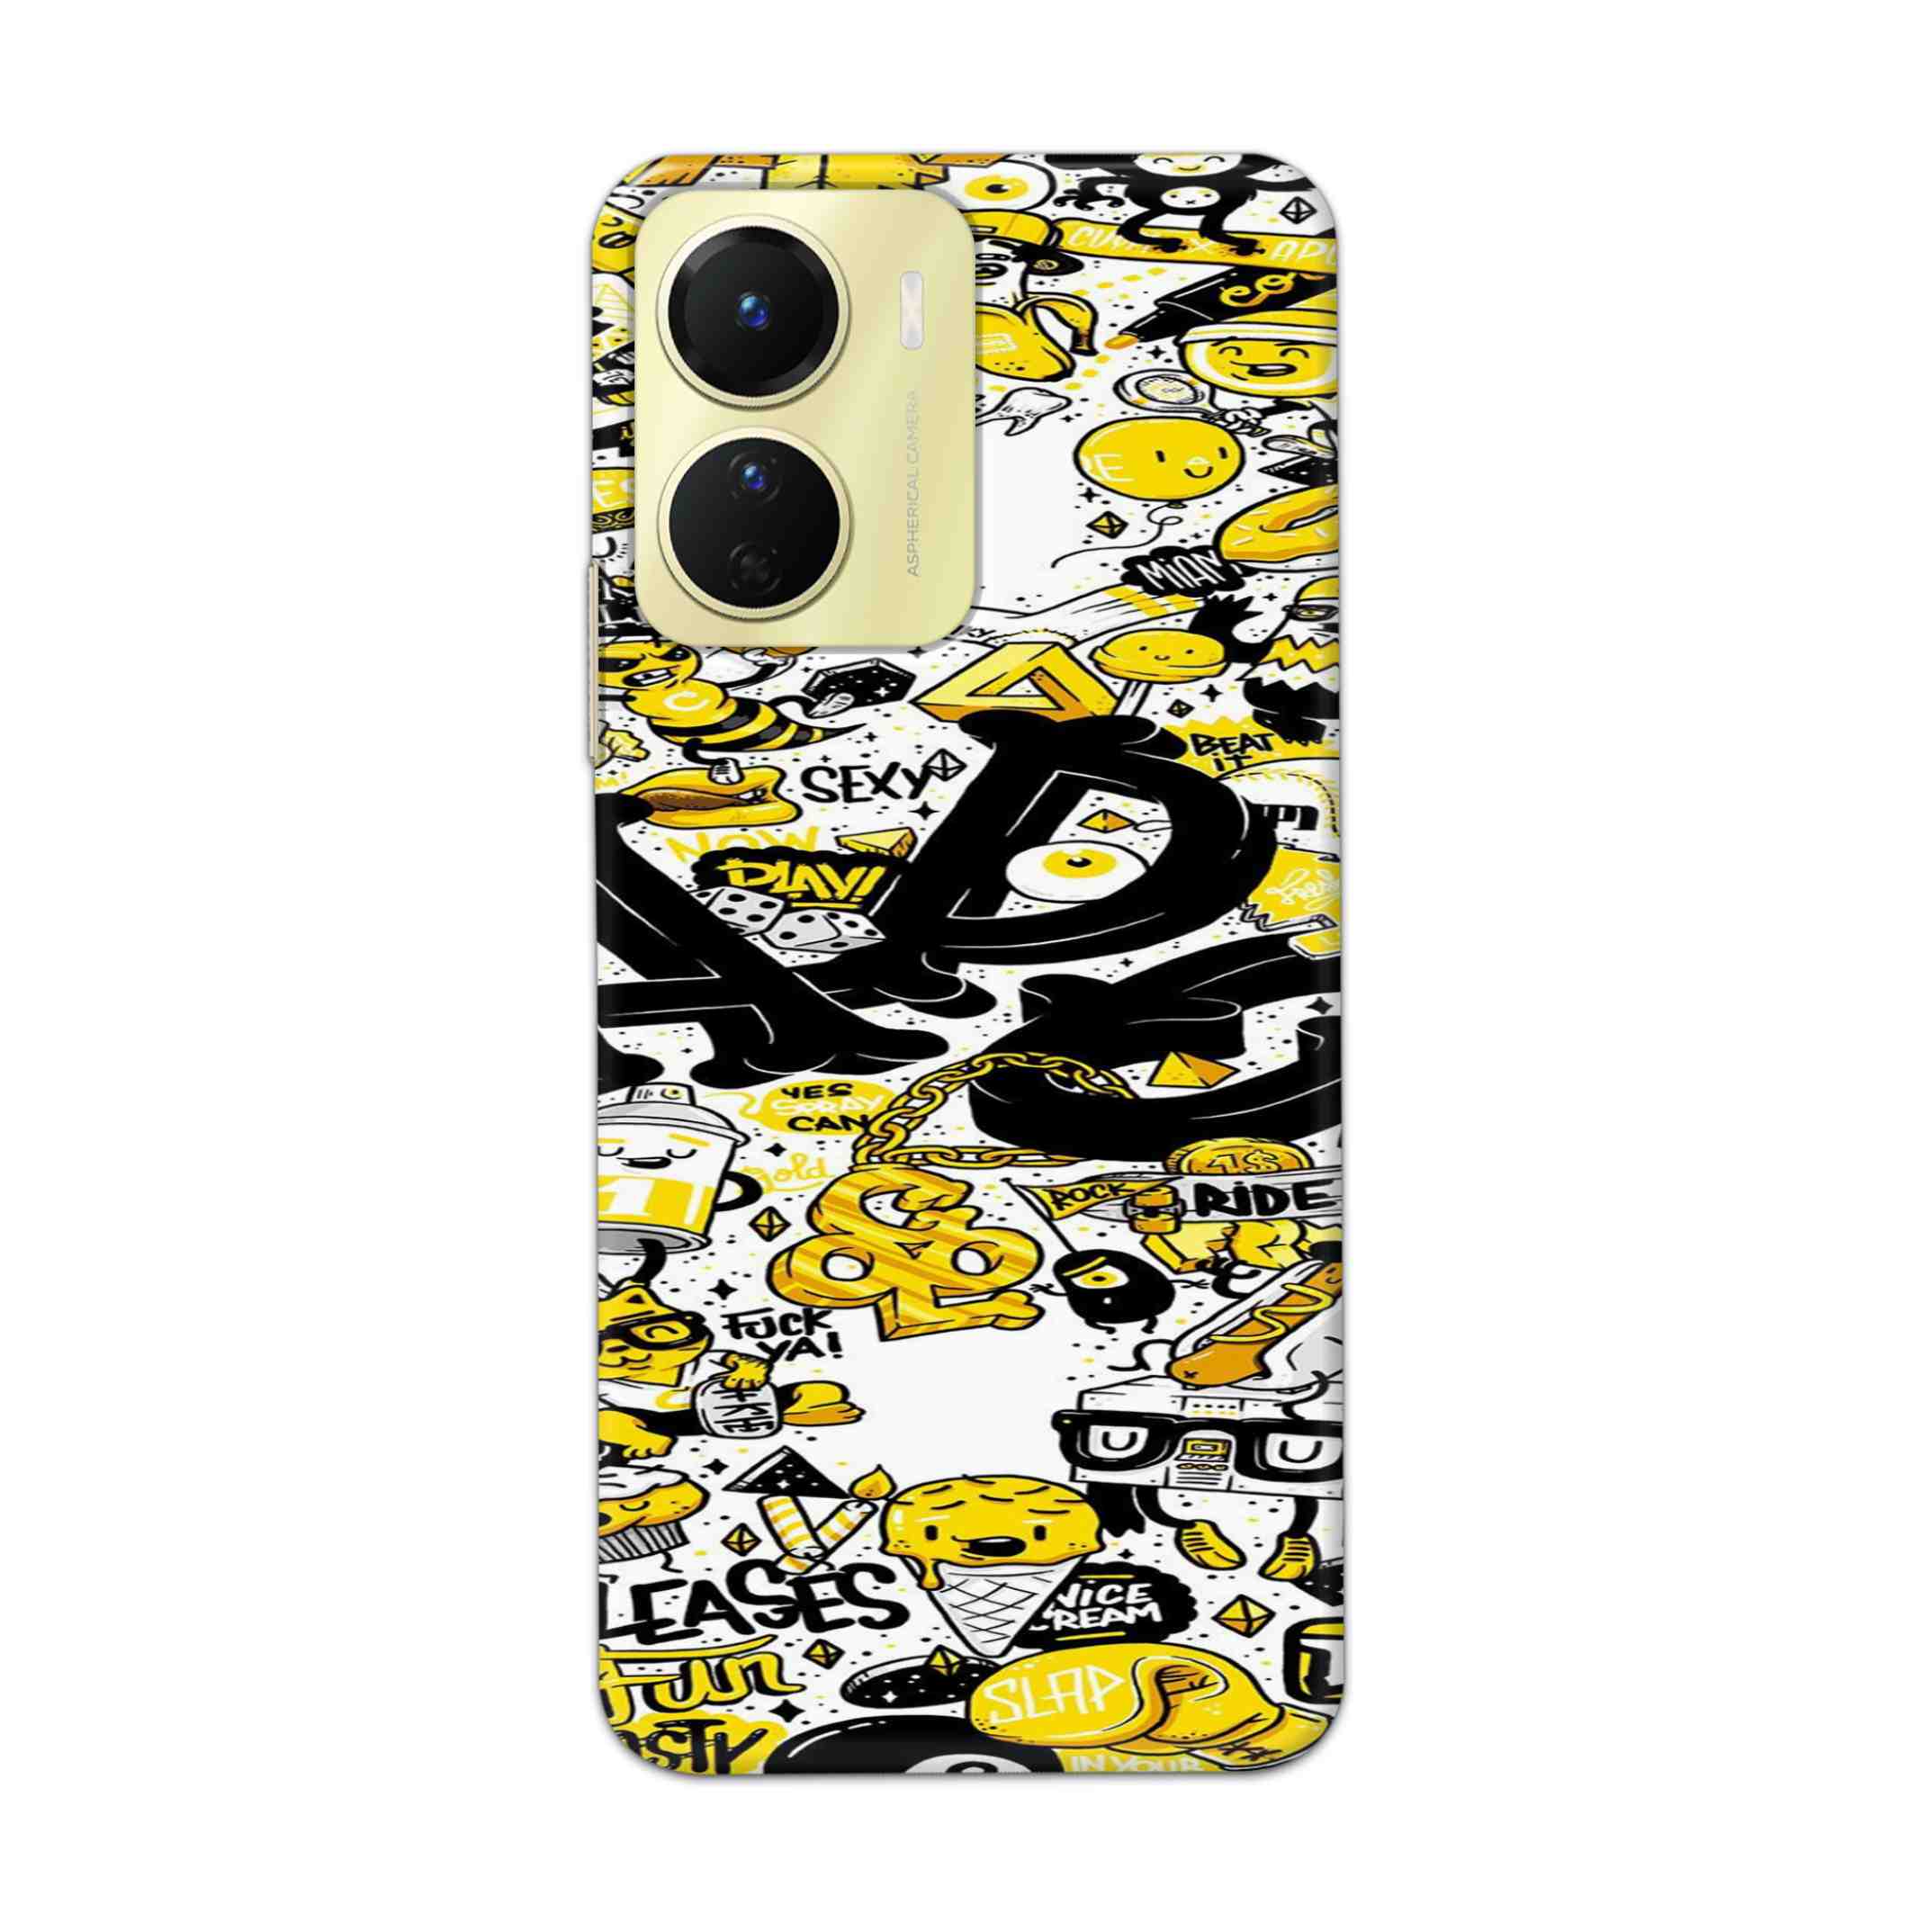 Buy Ado Hard Back Mobile Phone Case Cover For Vivo Y16 Online